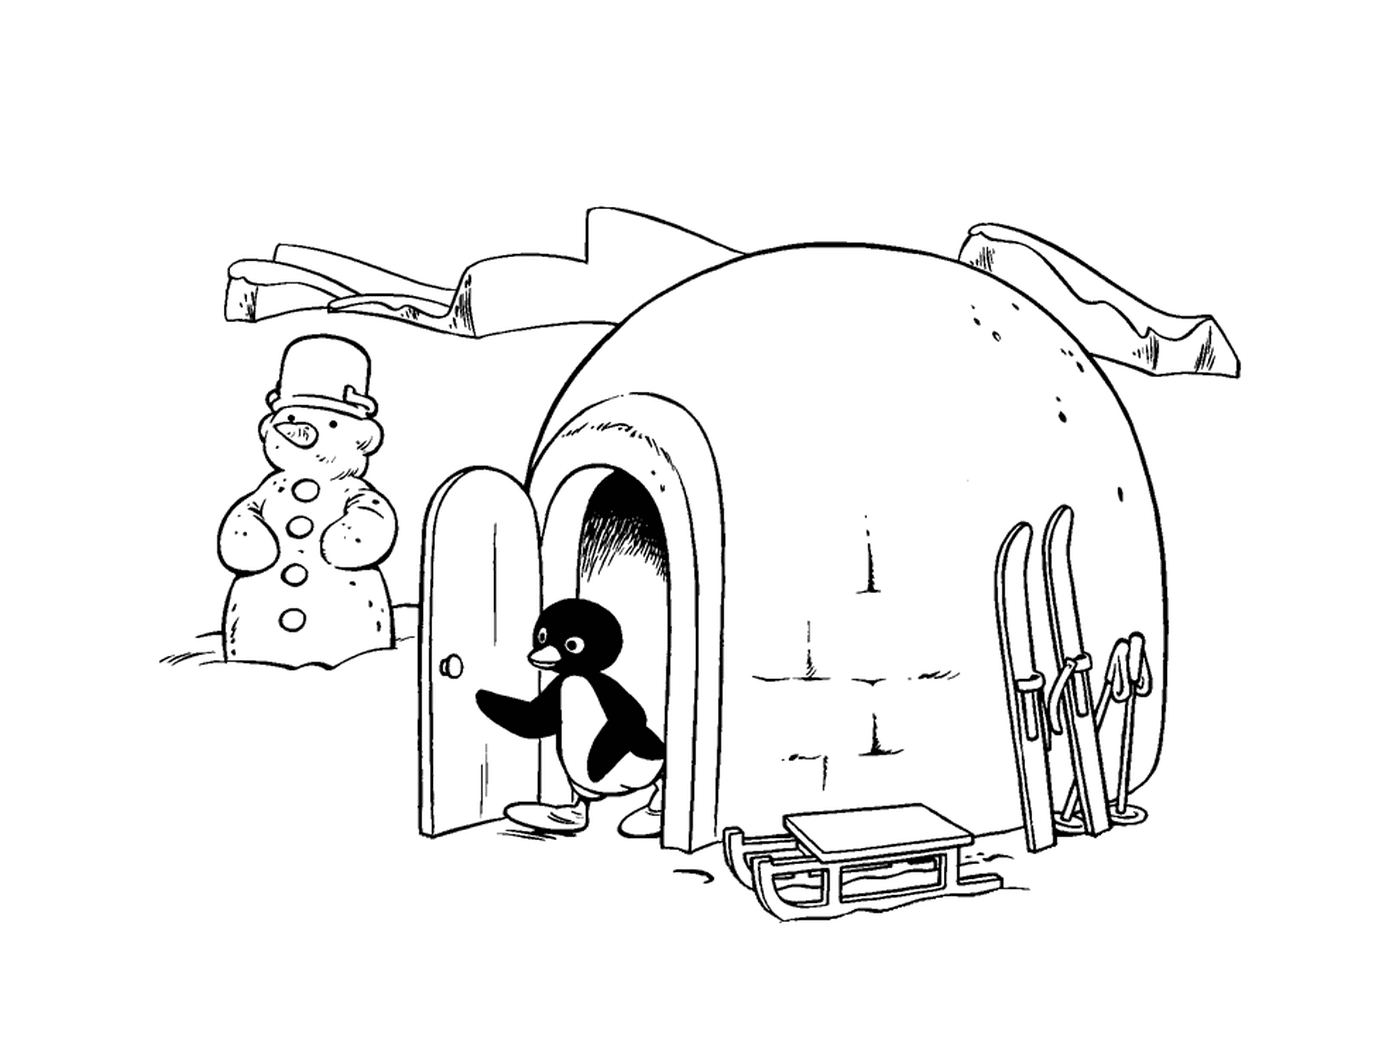  Pingu che esce dal suo igloo 